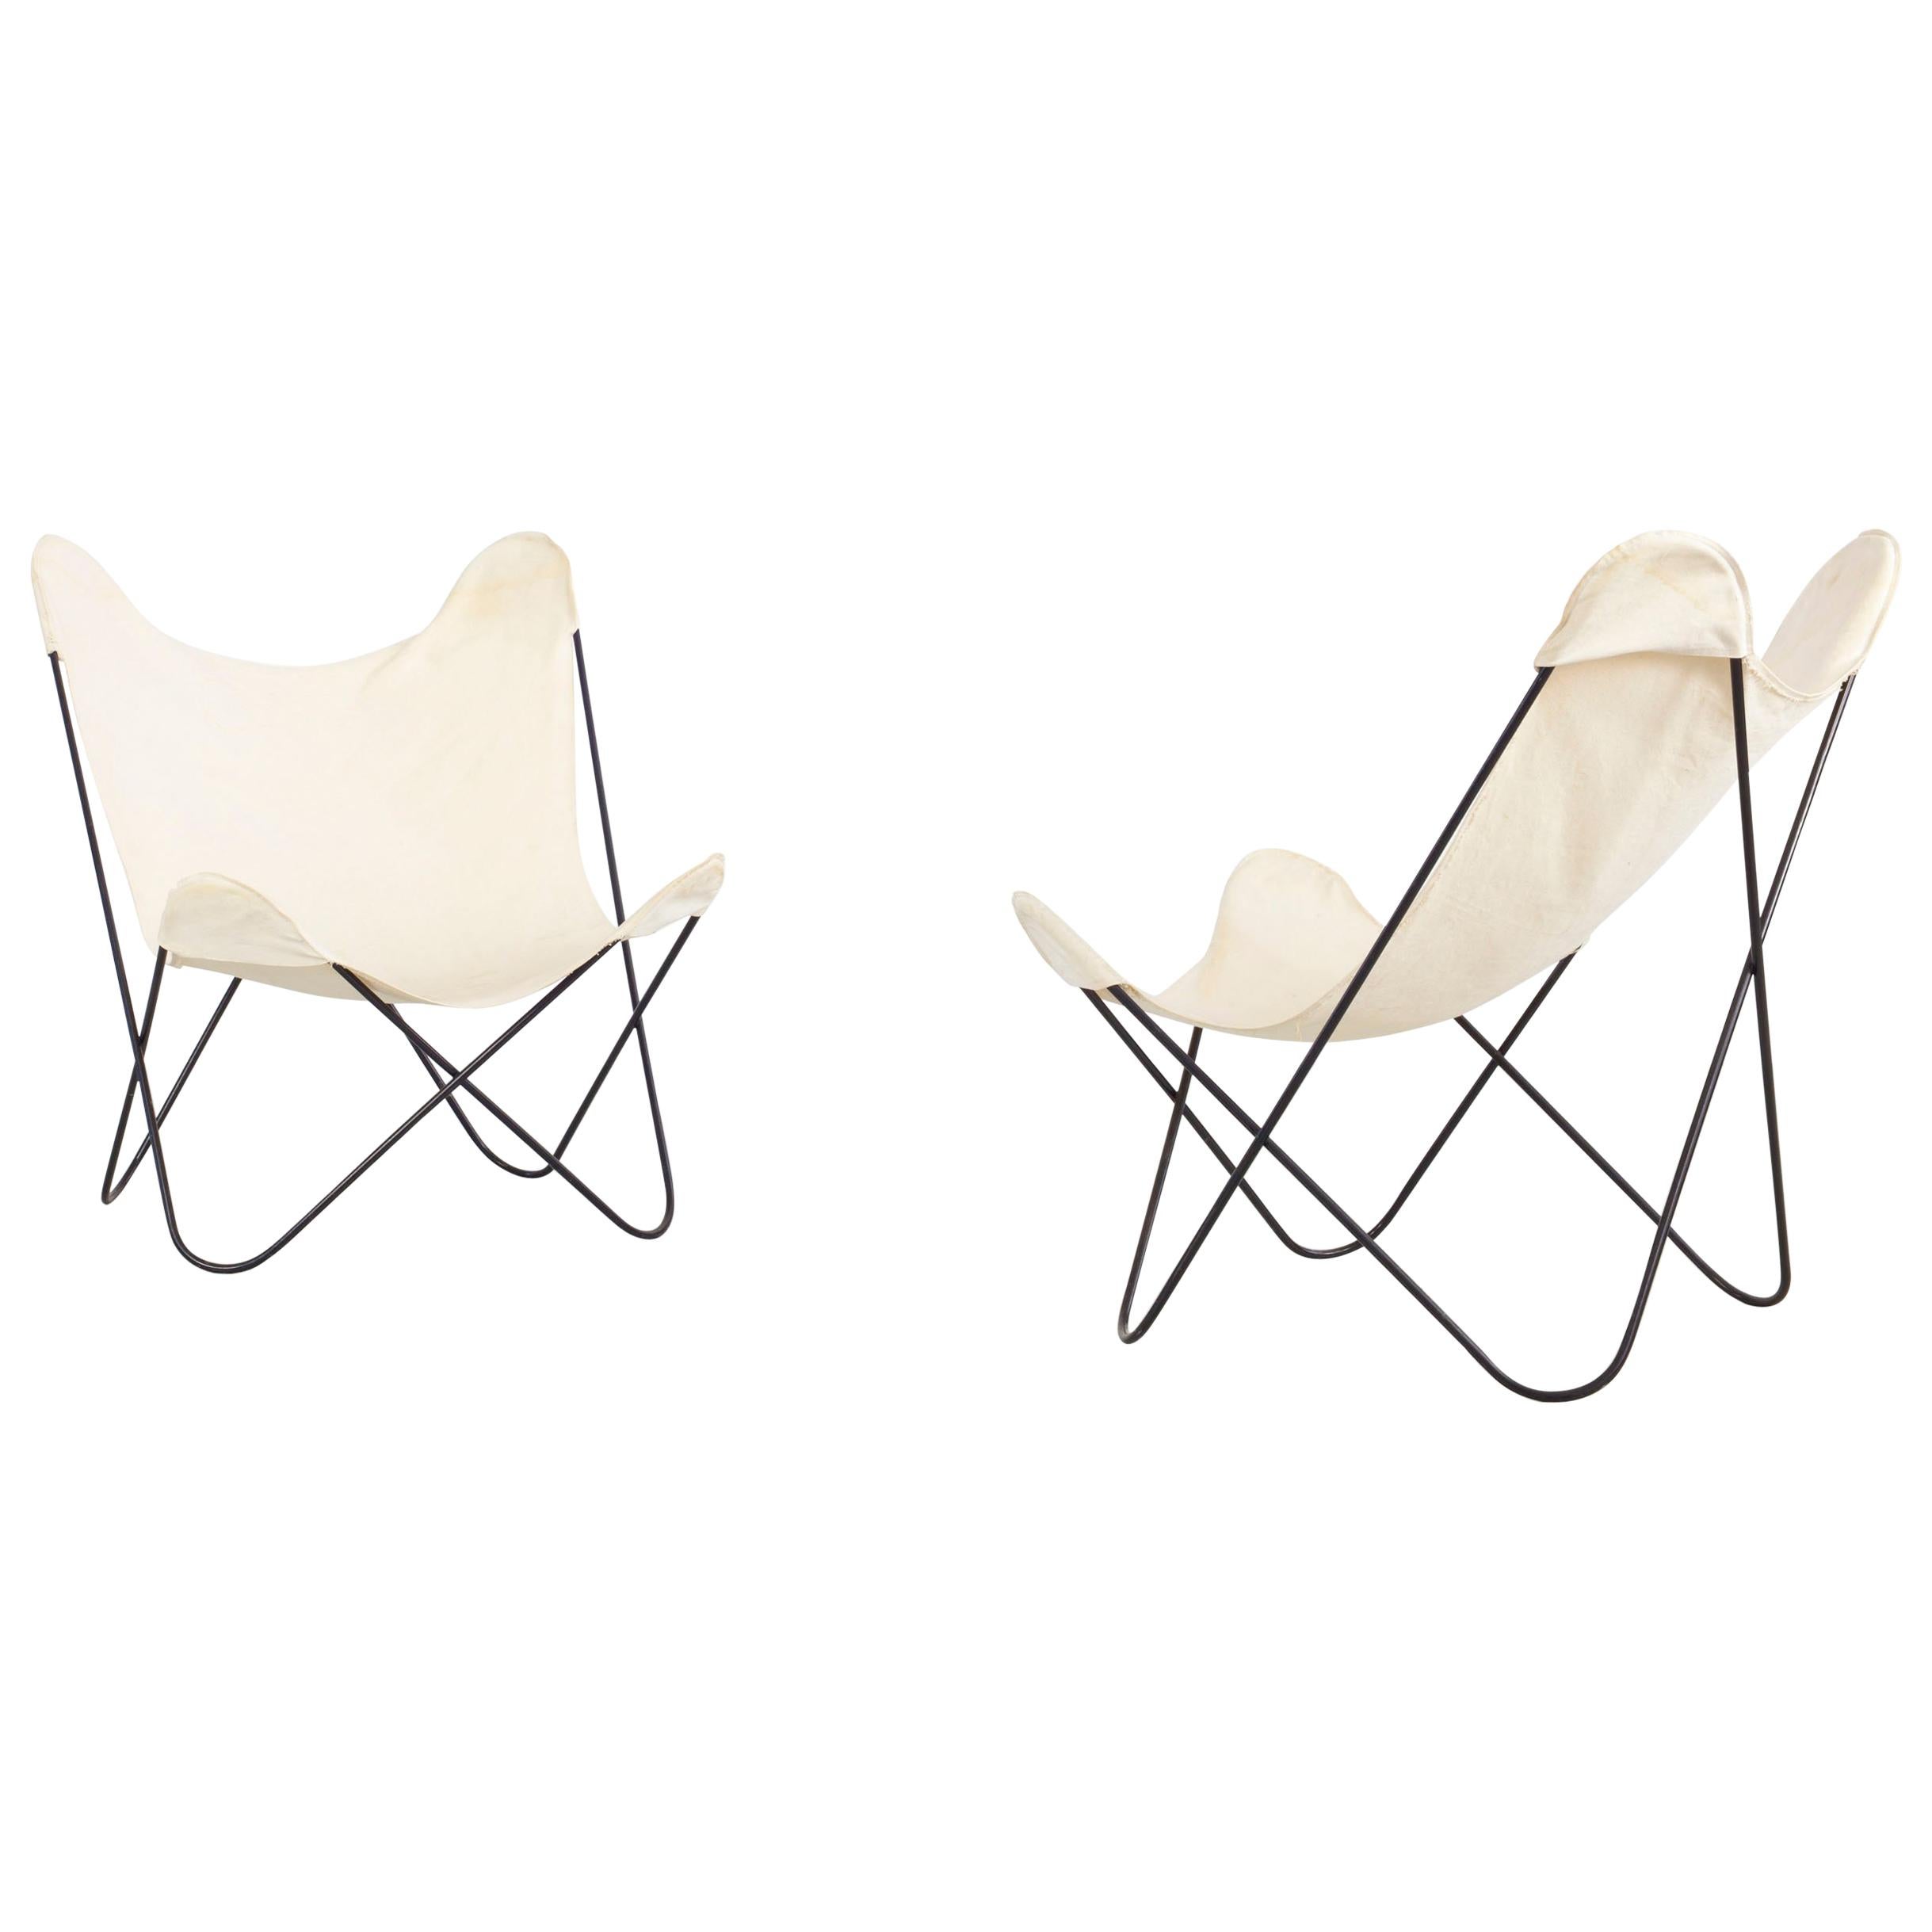 Gastone Rinaldi Italian Pair of White "Tripolina" Chairs Manufactured by Rima